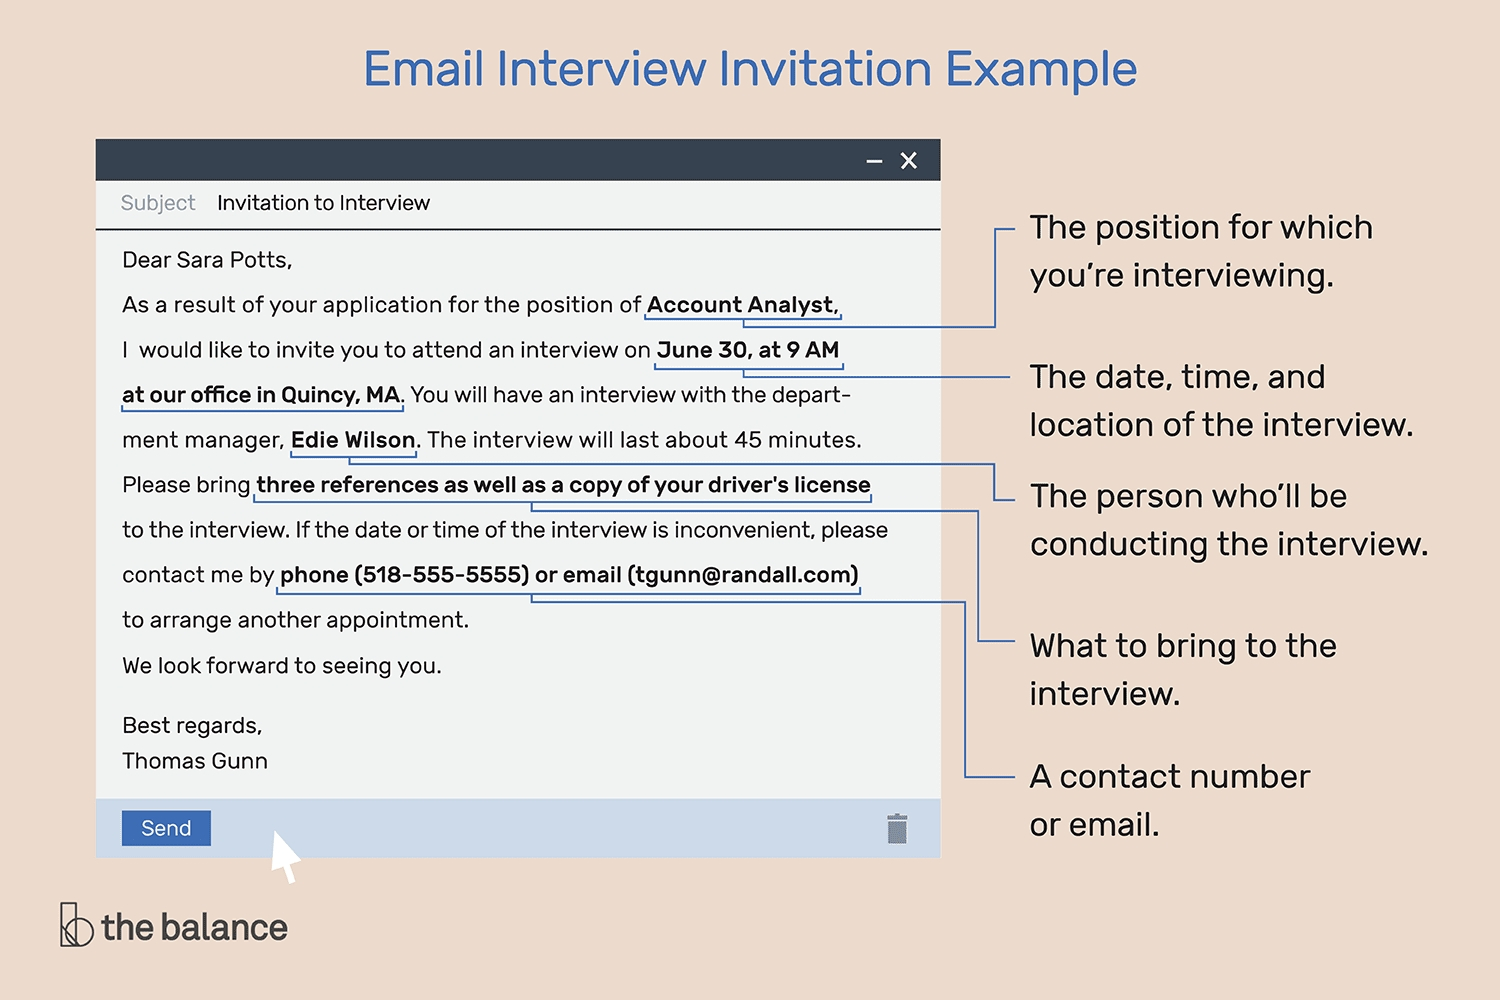 Calandar Invite For A Vacancy | Calendar Template 2021 regarding Calendar Invitation Your Response To The Invitation Cannot Be Sent